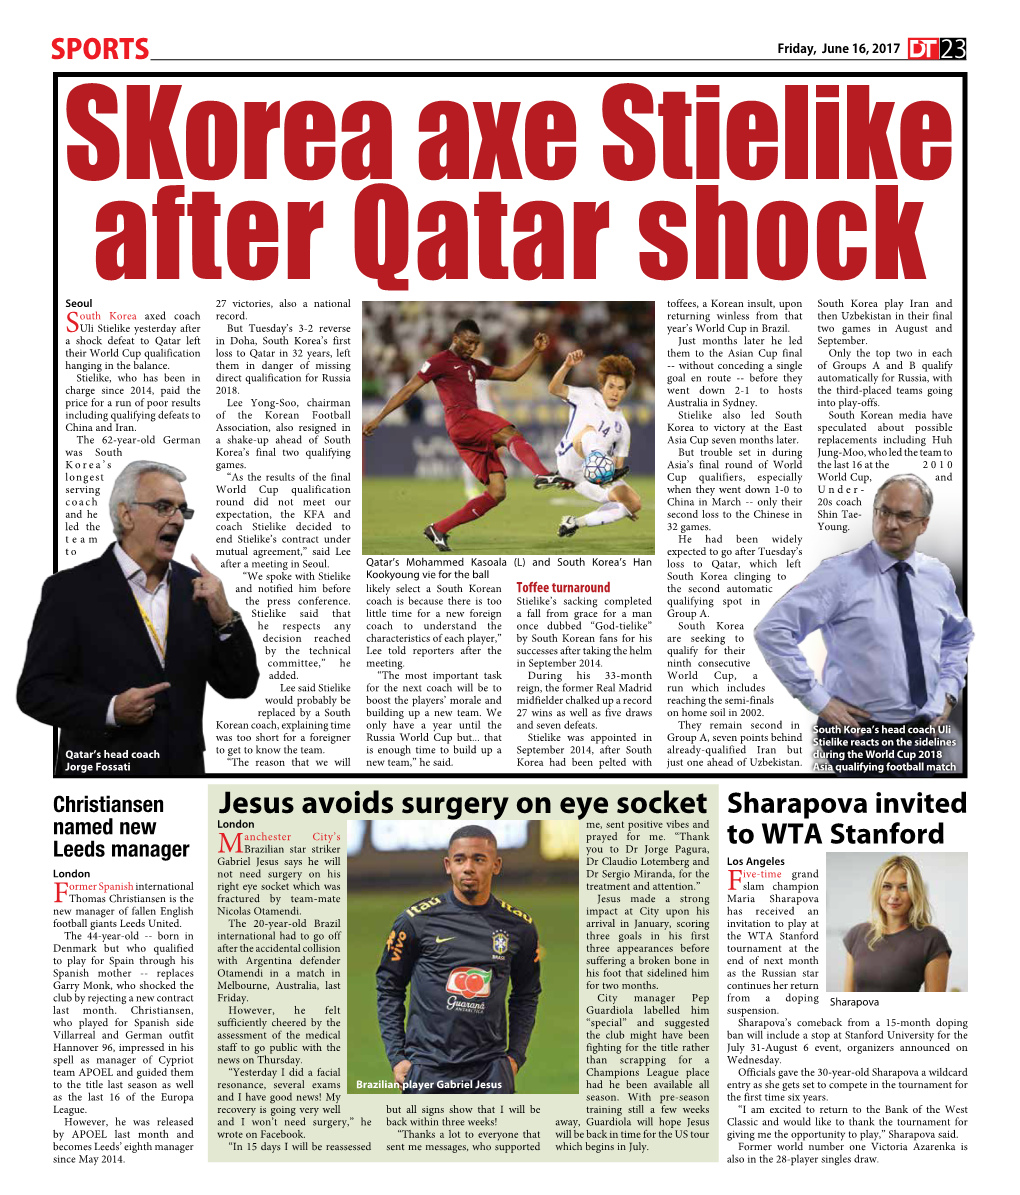 Skorea Axe Stielike After Qatar Shock